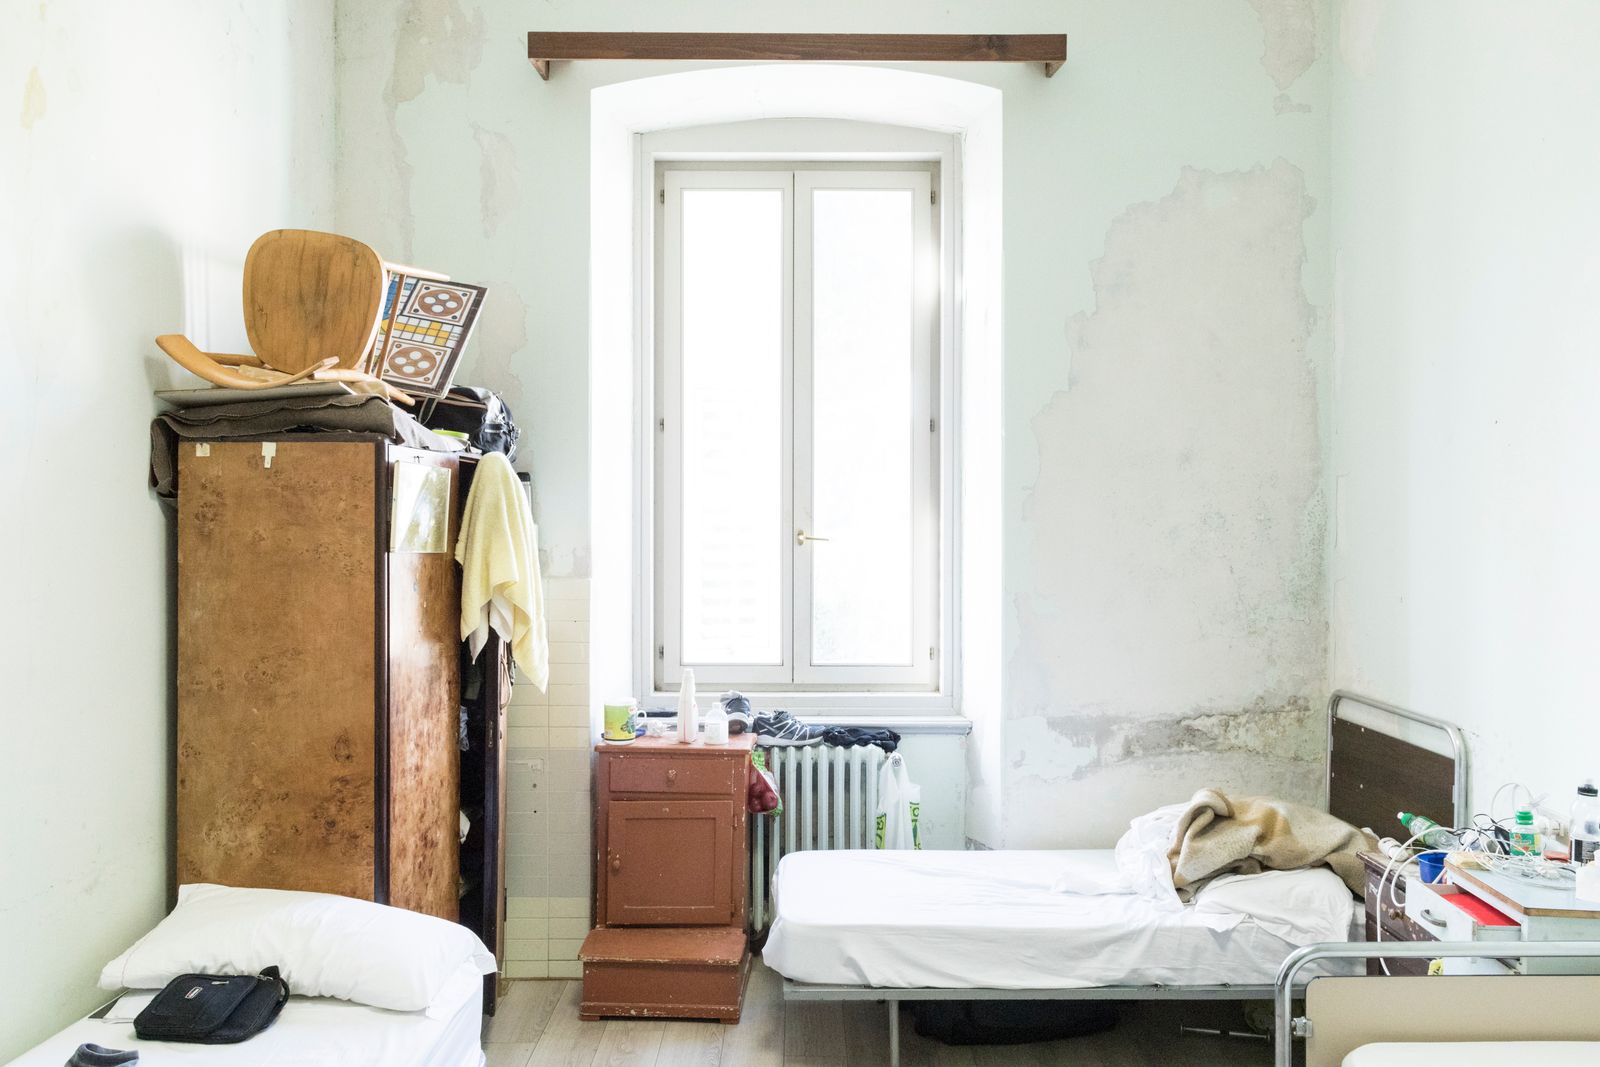 © Manuela Schirra and Fabrizio Giraldi  - Room in the former Nazarene convent.